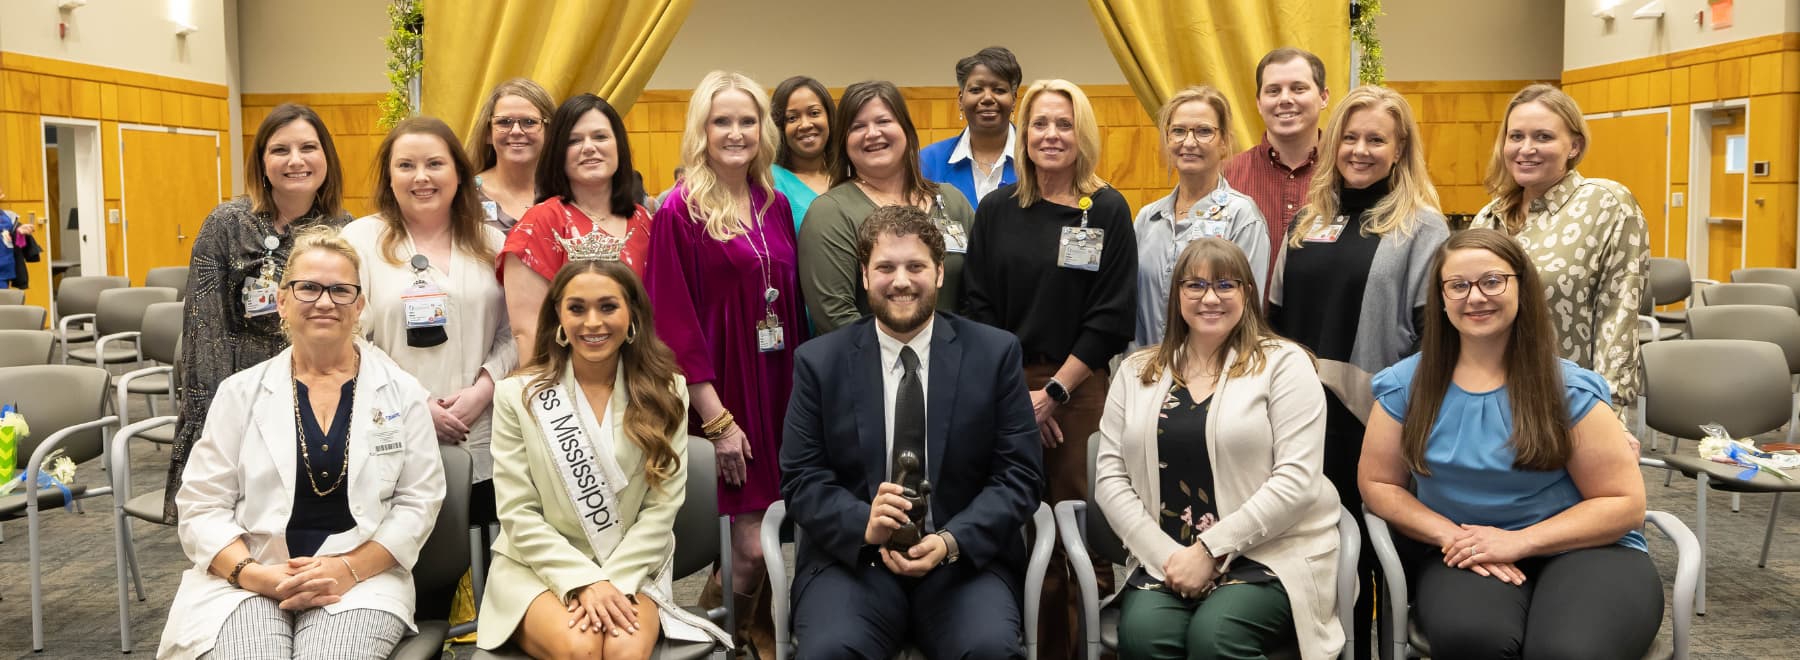 Group photo from the 4th annual Daisy Nurse Leader Award Ceremony.